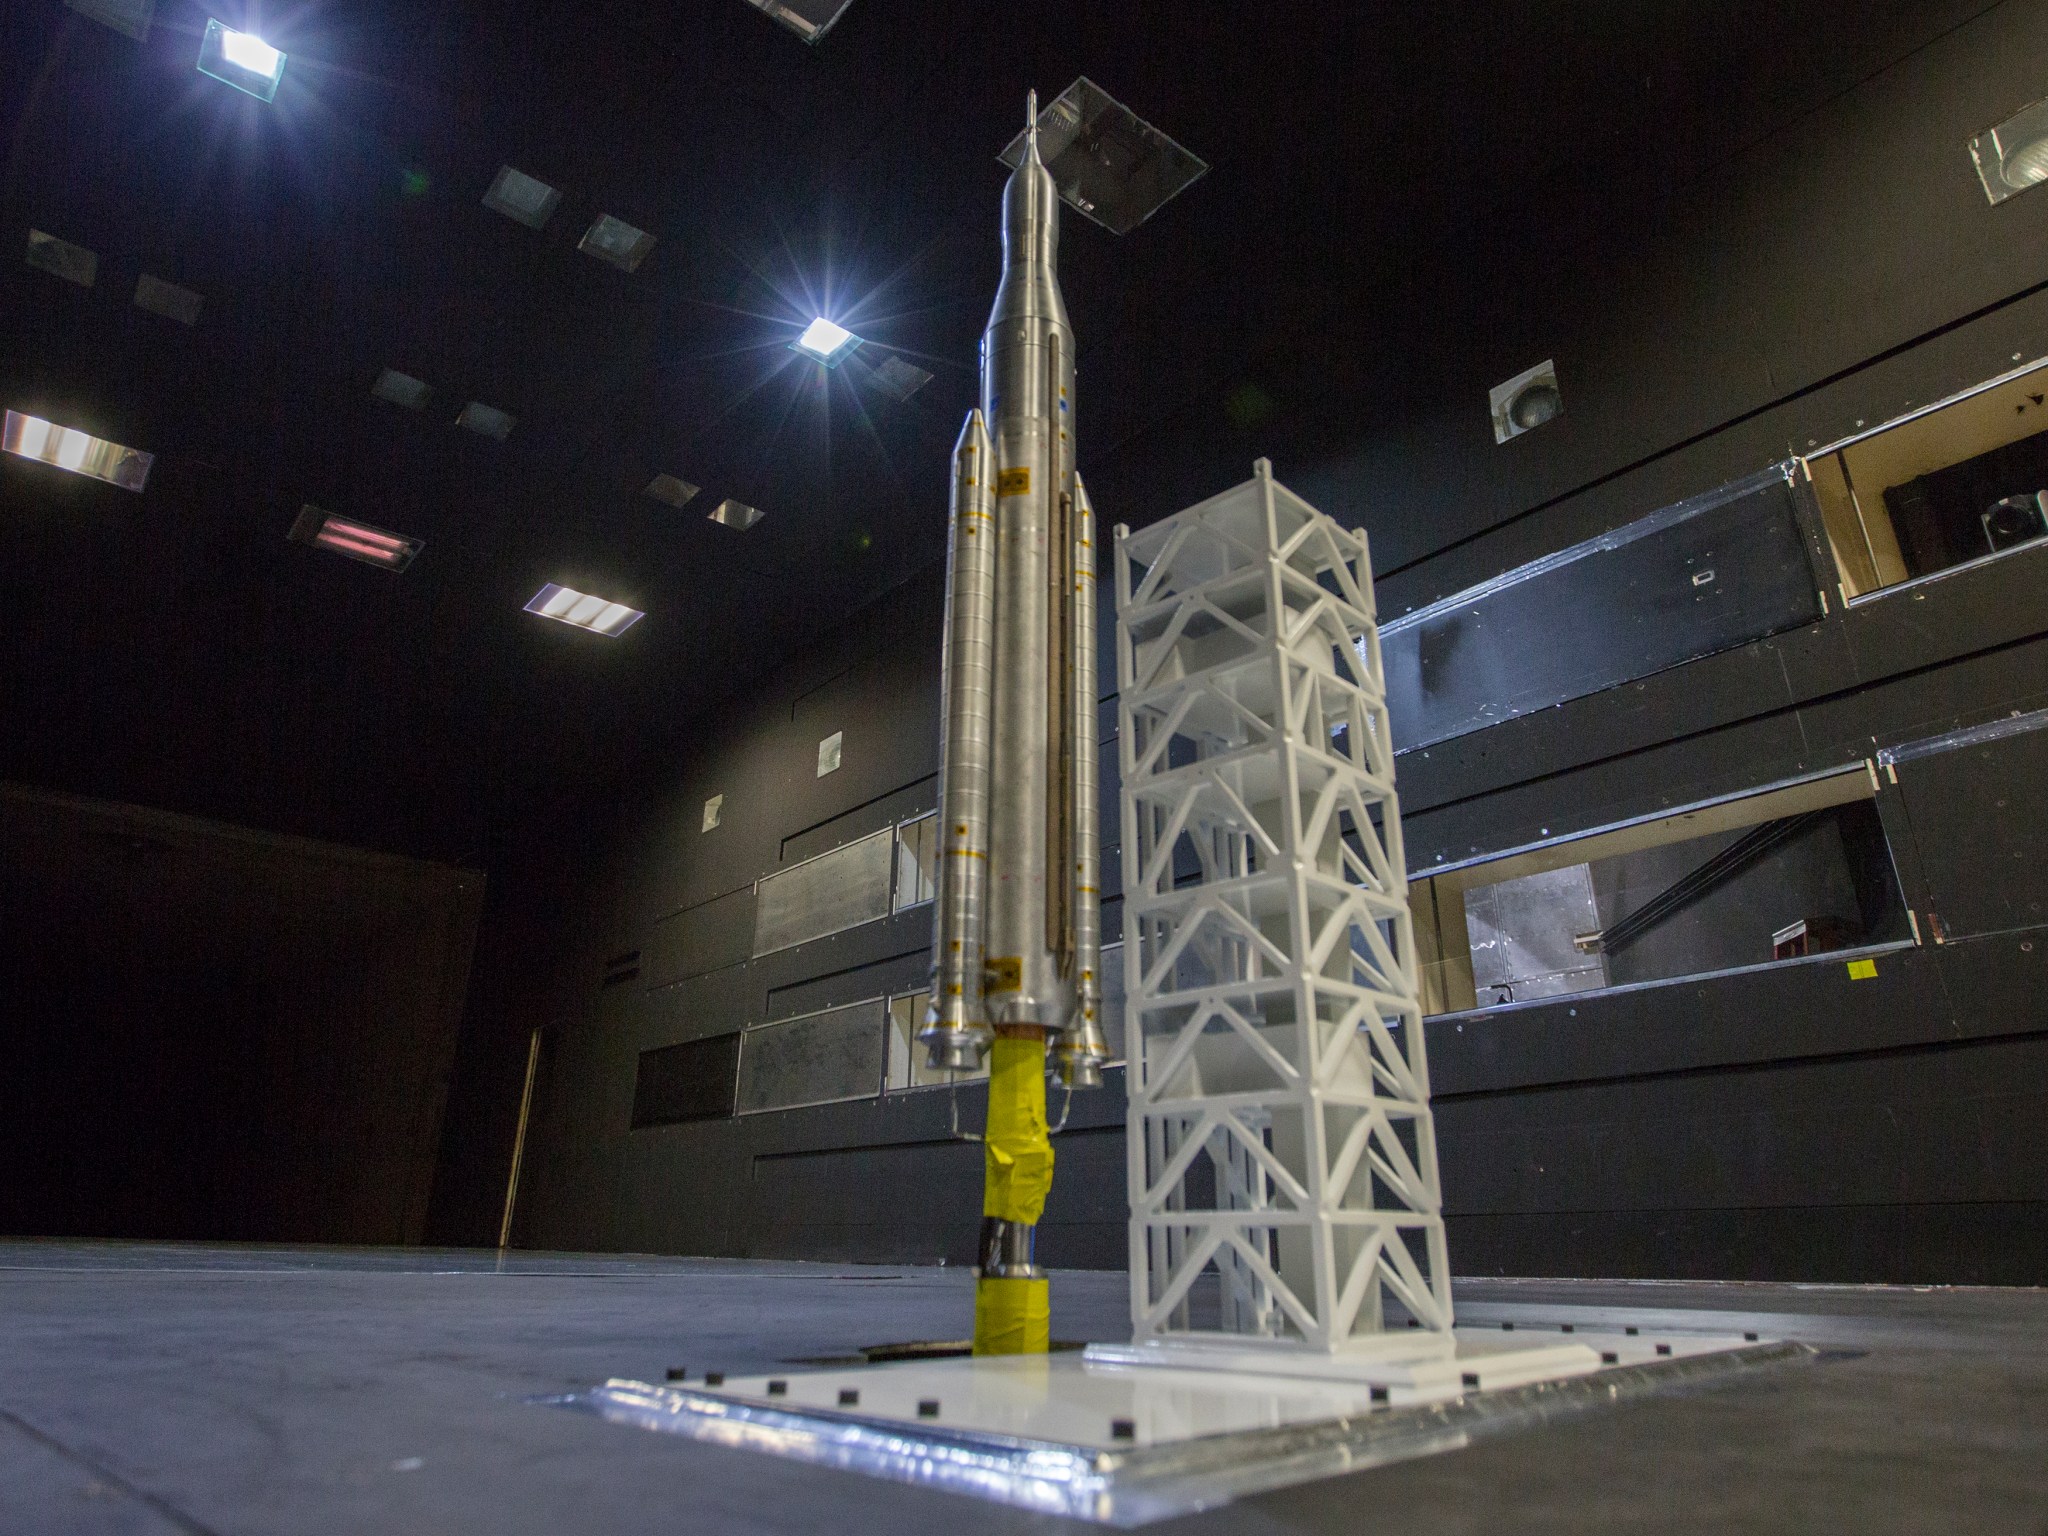 The 6-foot model of the SLS rocket 